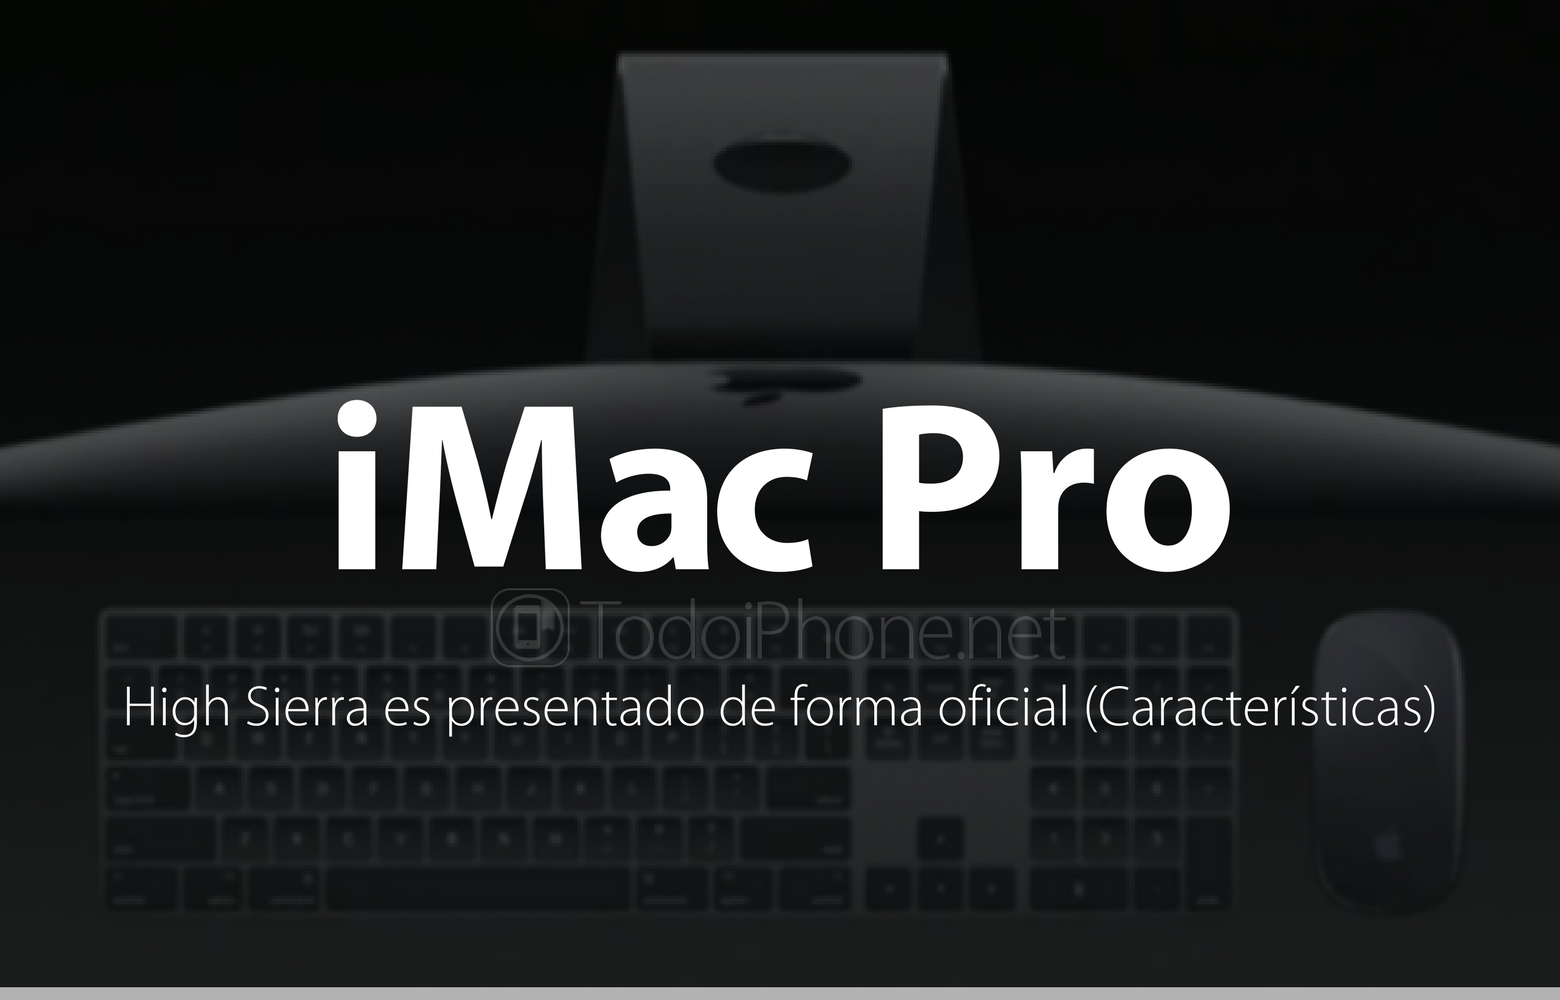 whatsapp for apple mac pro